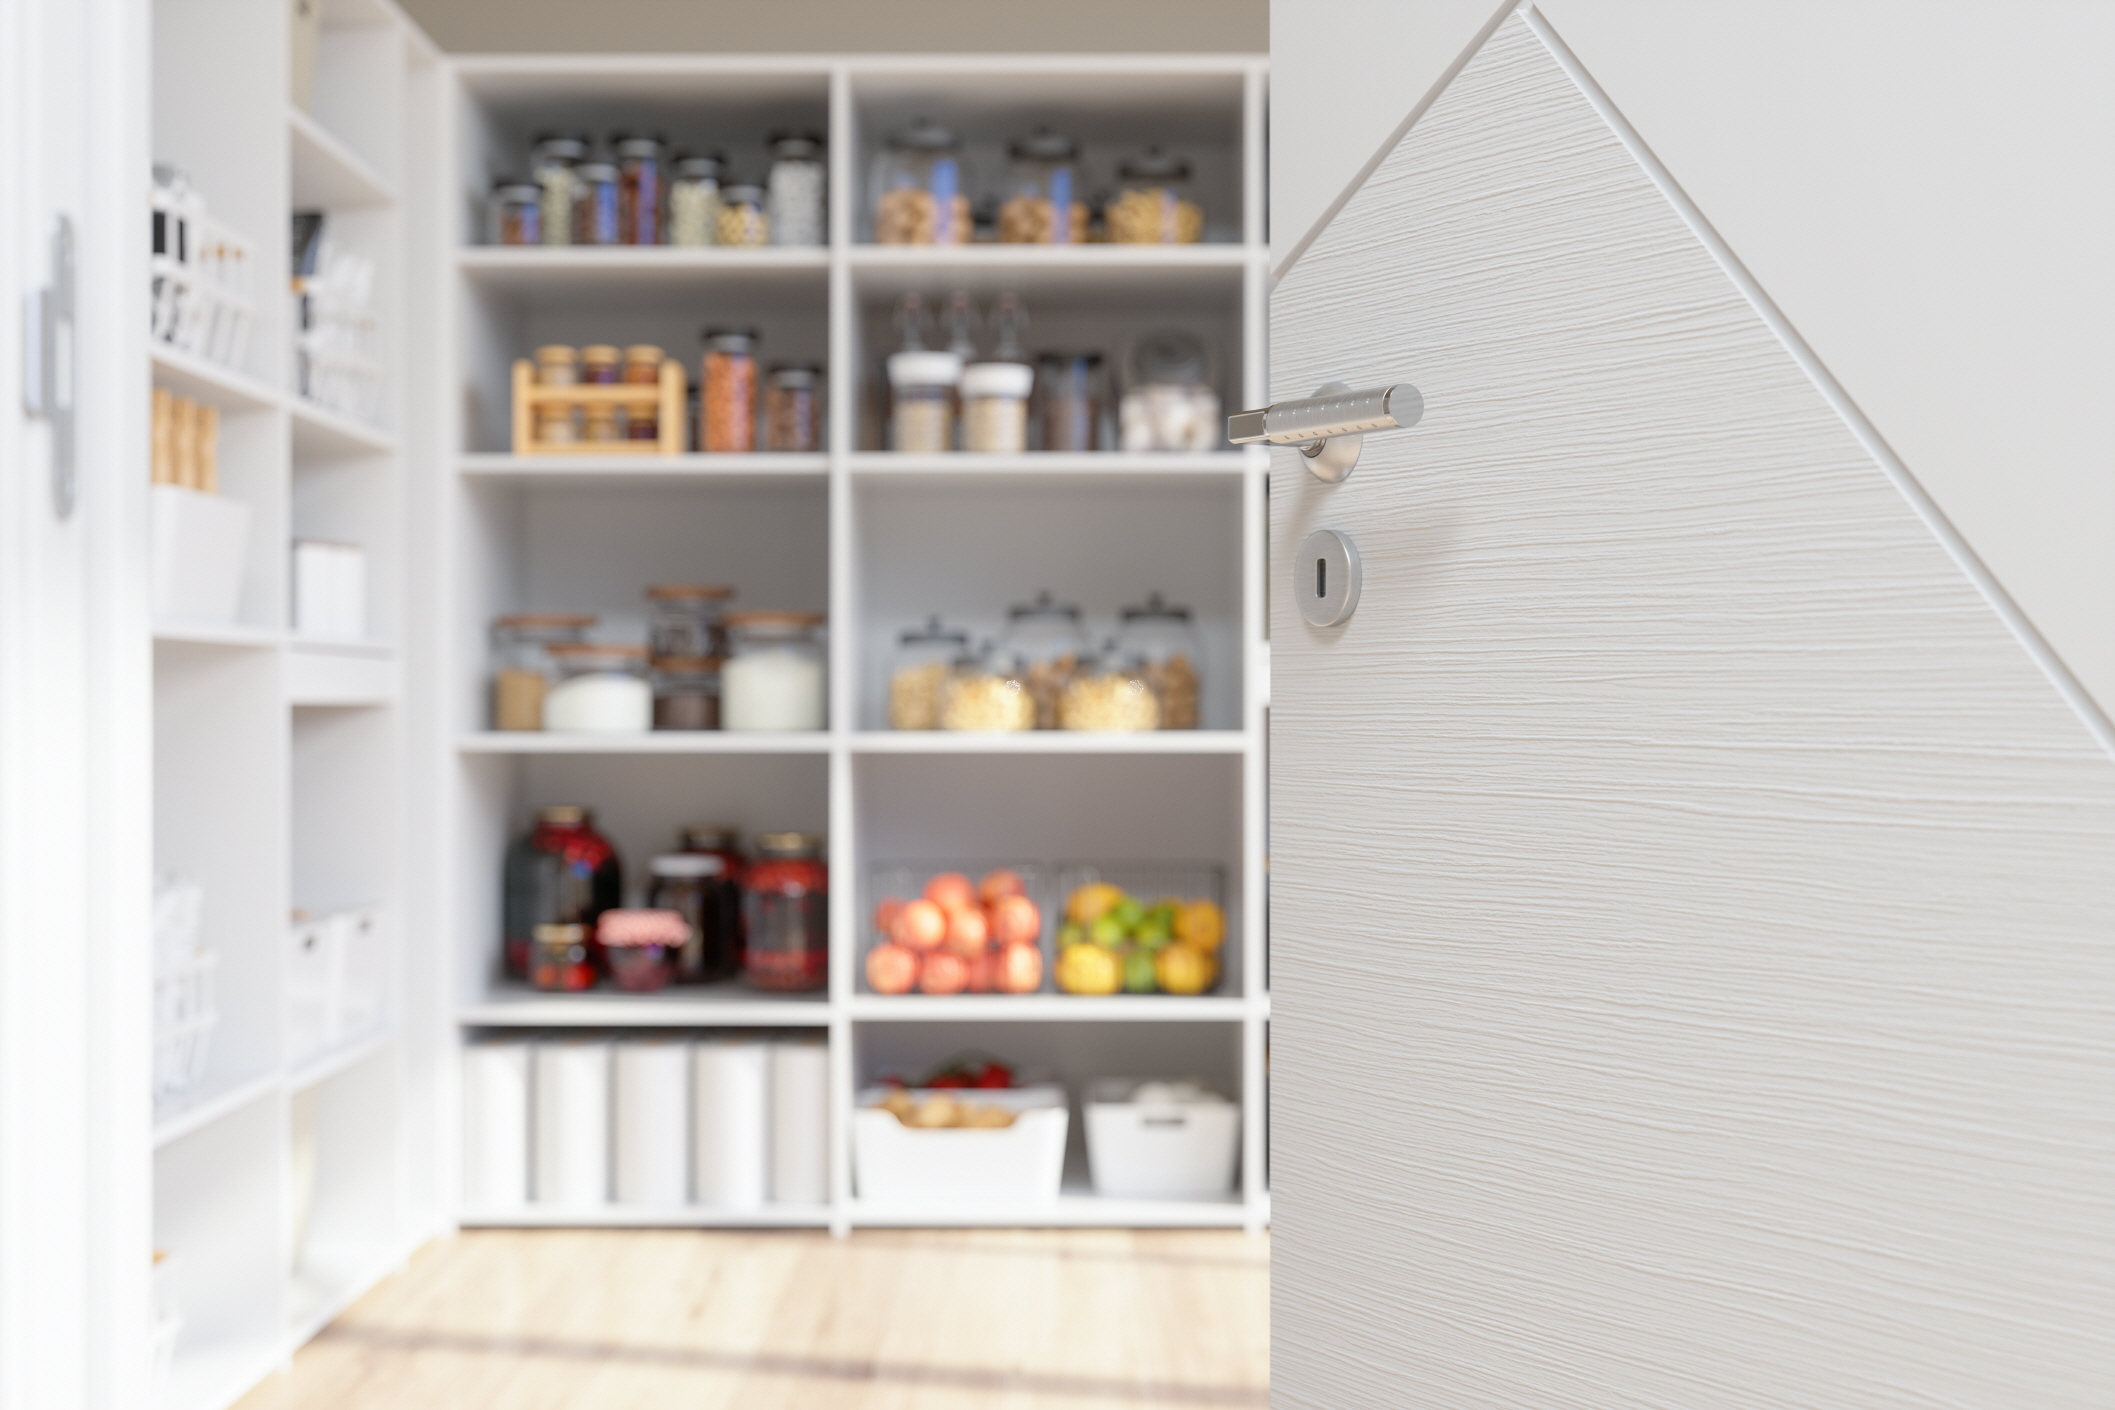 Repurpose nearby closet into secondary pantry for extra storage.